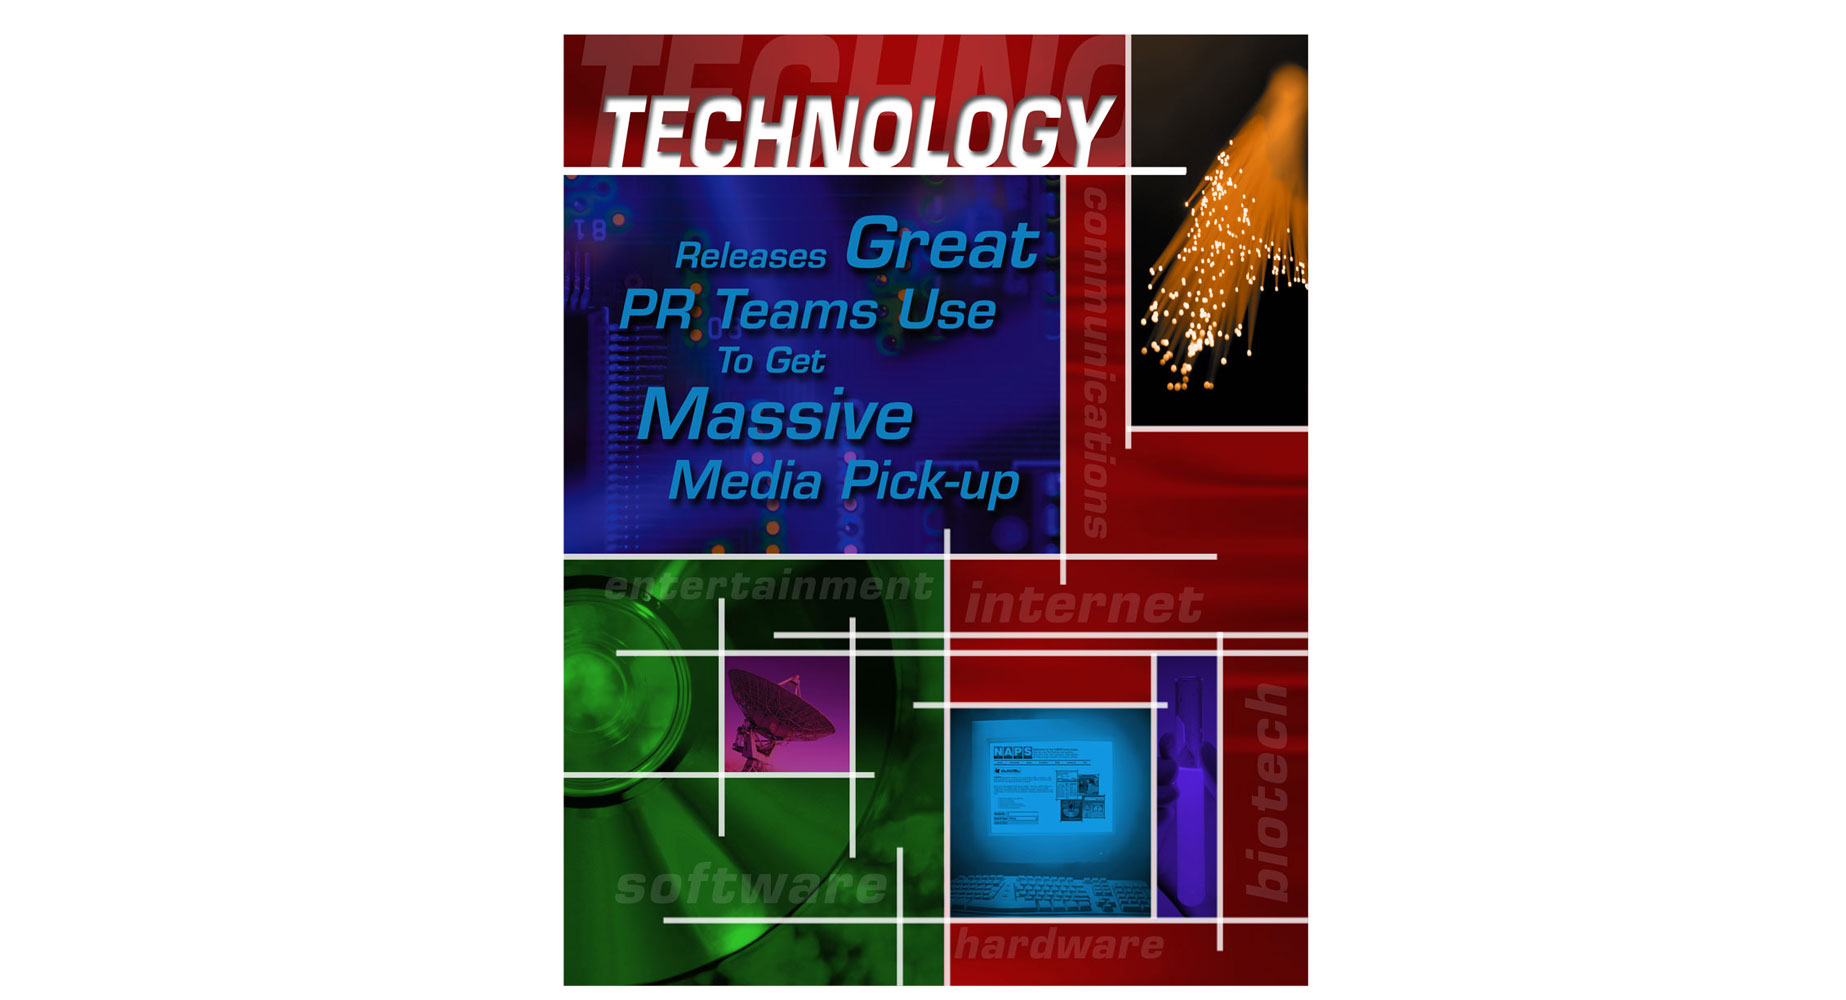 Professional Services technology brochure design